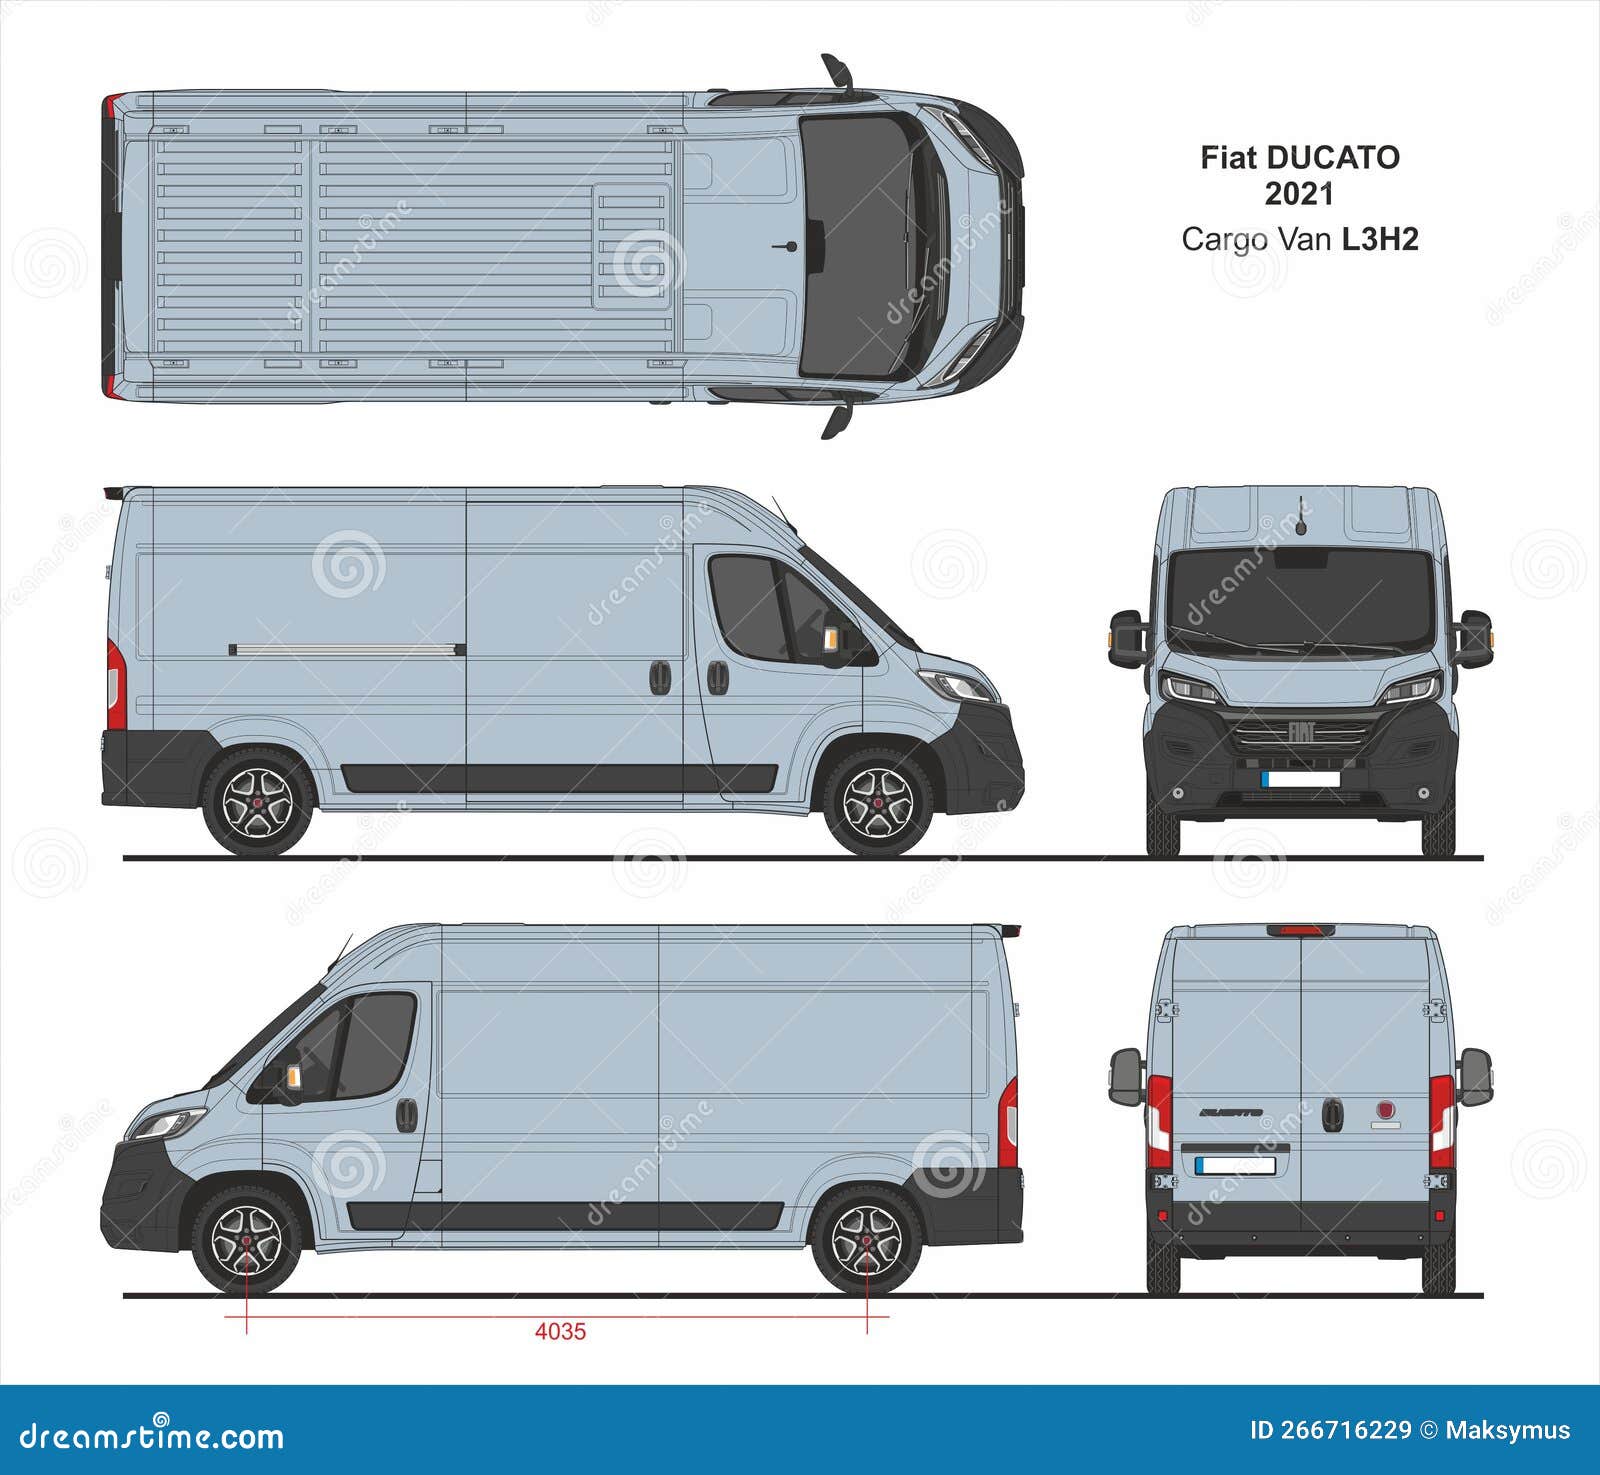 Fiat Ducato Cargo Delivery Van L3H2 2021 Editorial Stock Image